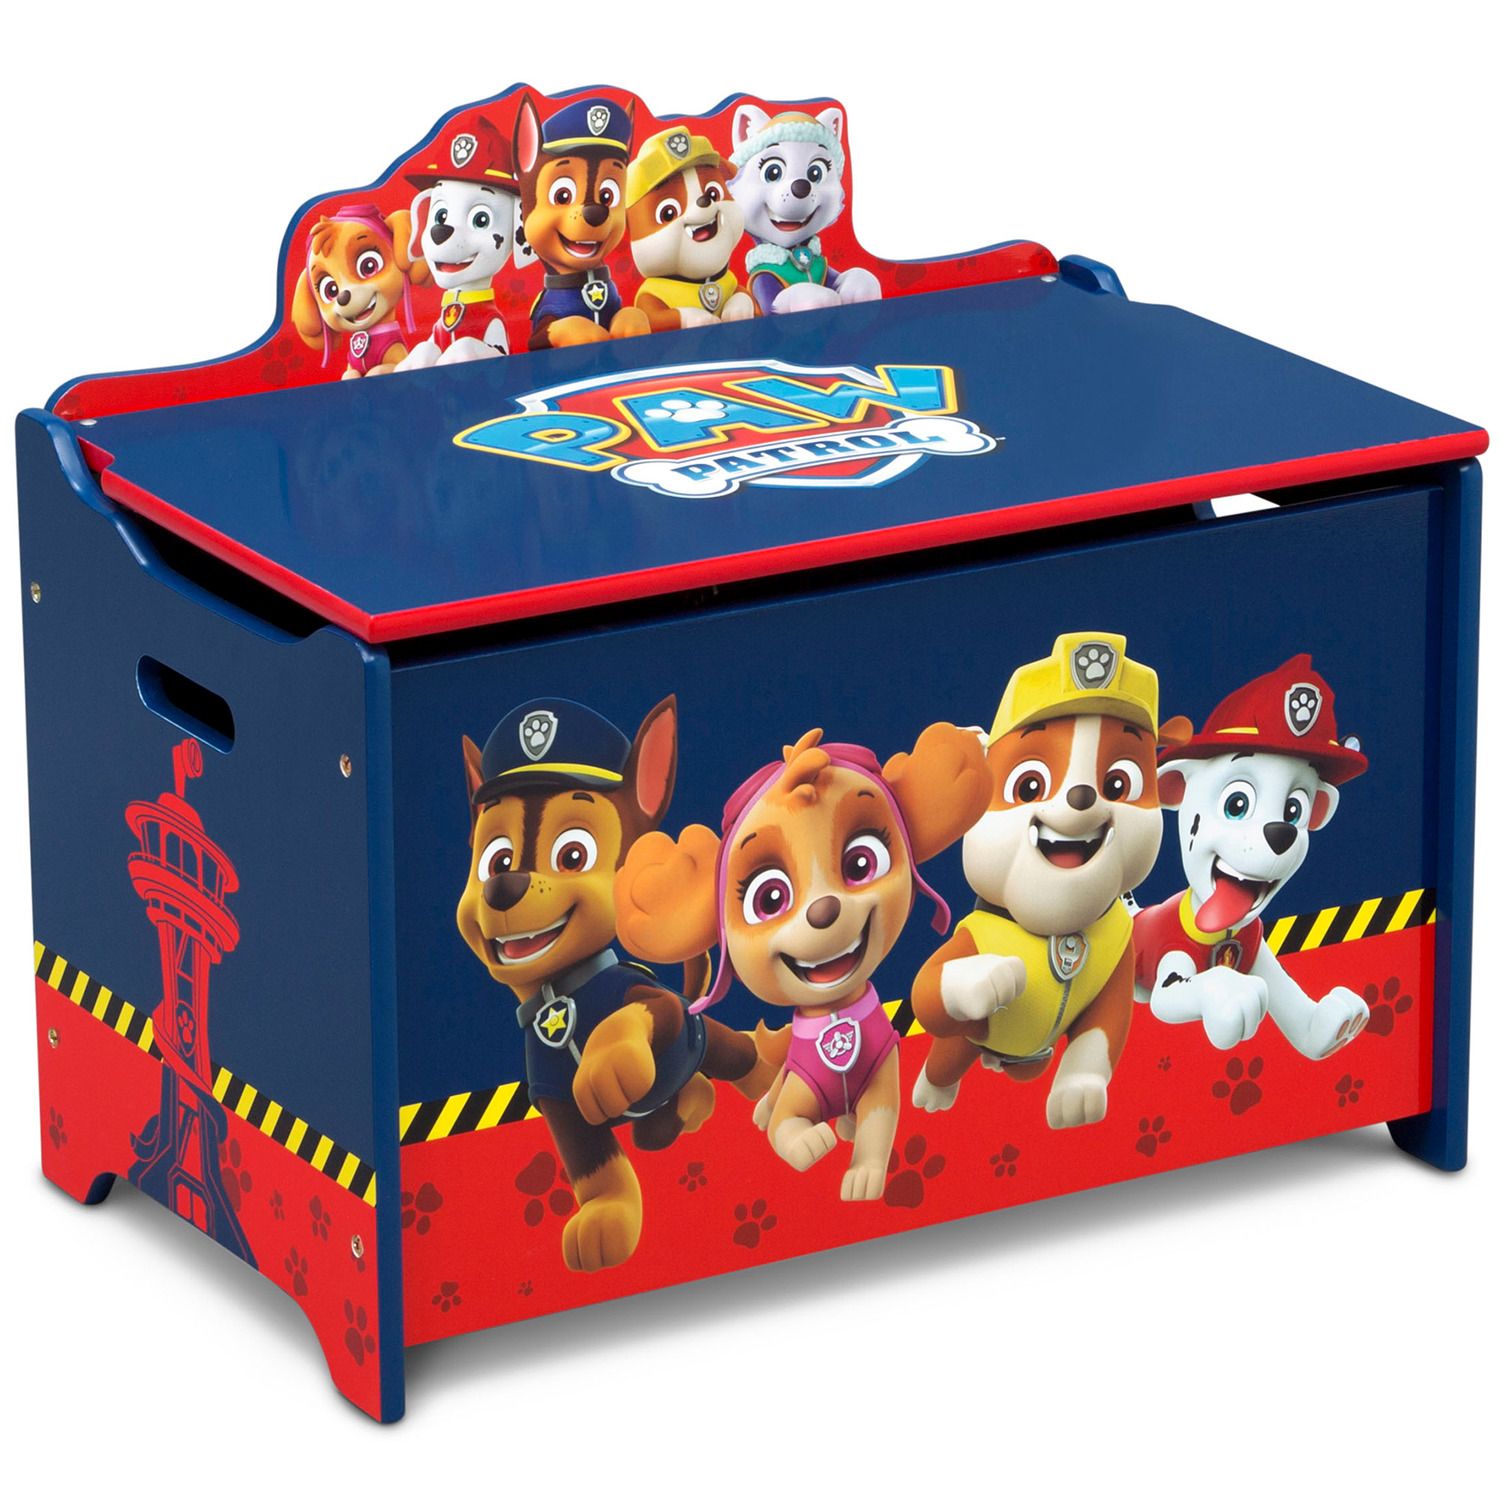 kohl's toy box